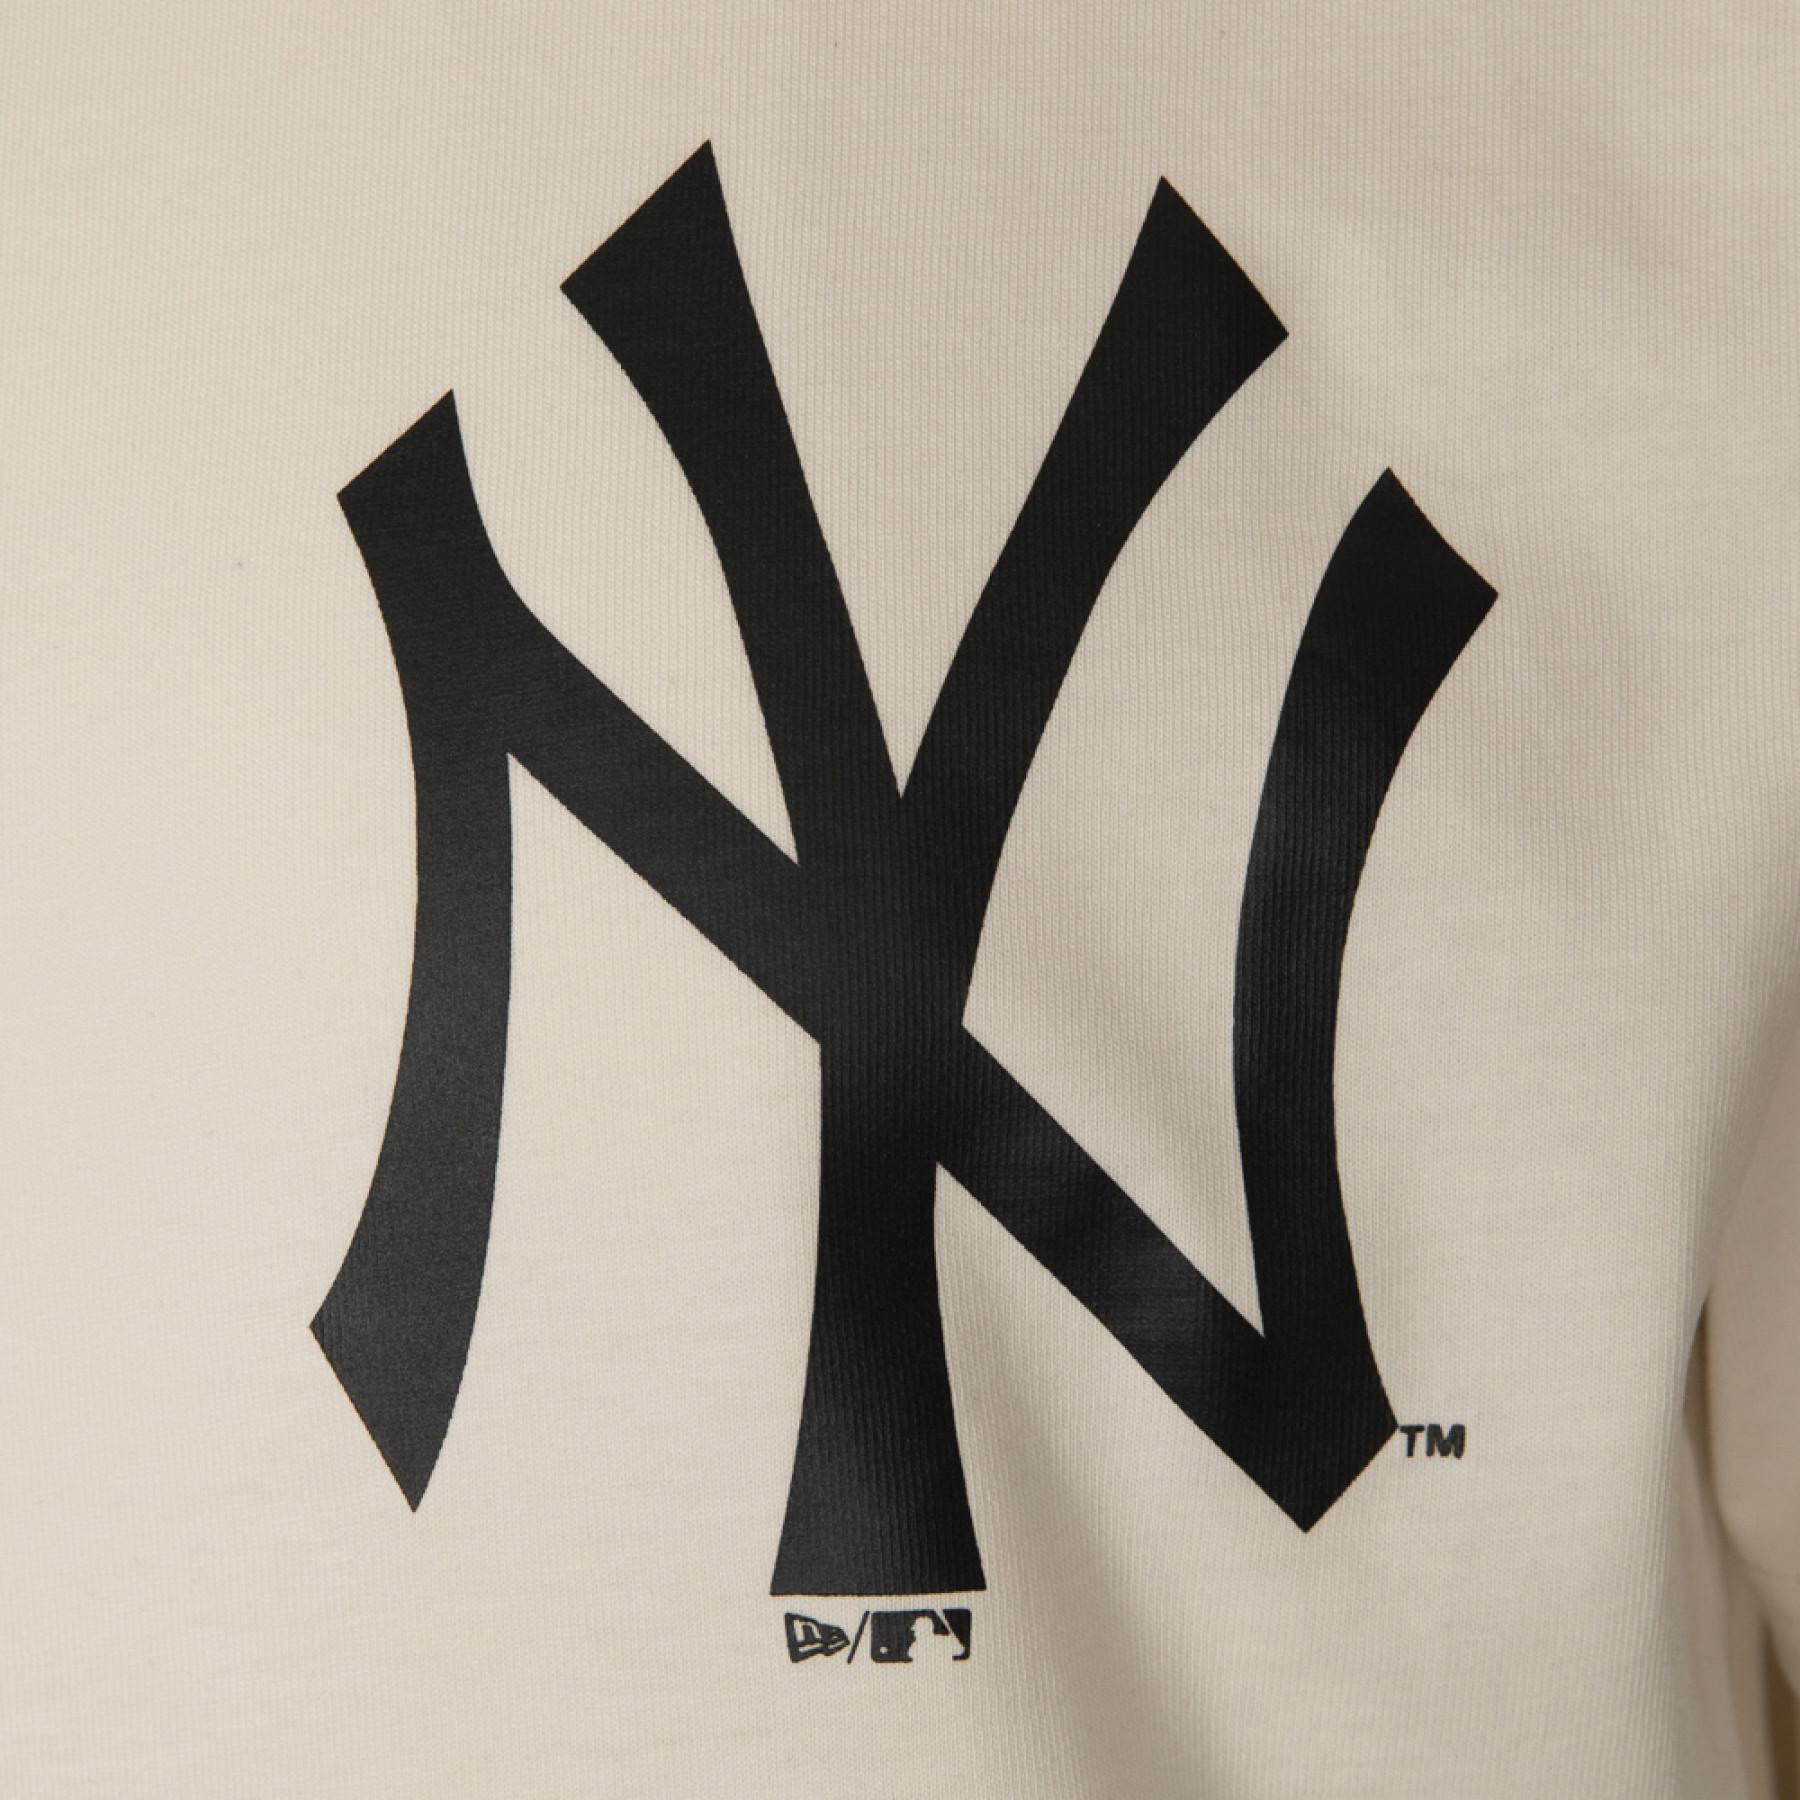 T-shirt oversized New Era Logo New York Yankees